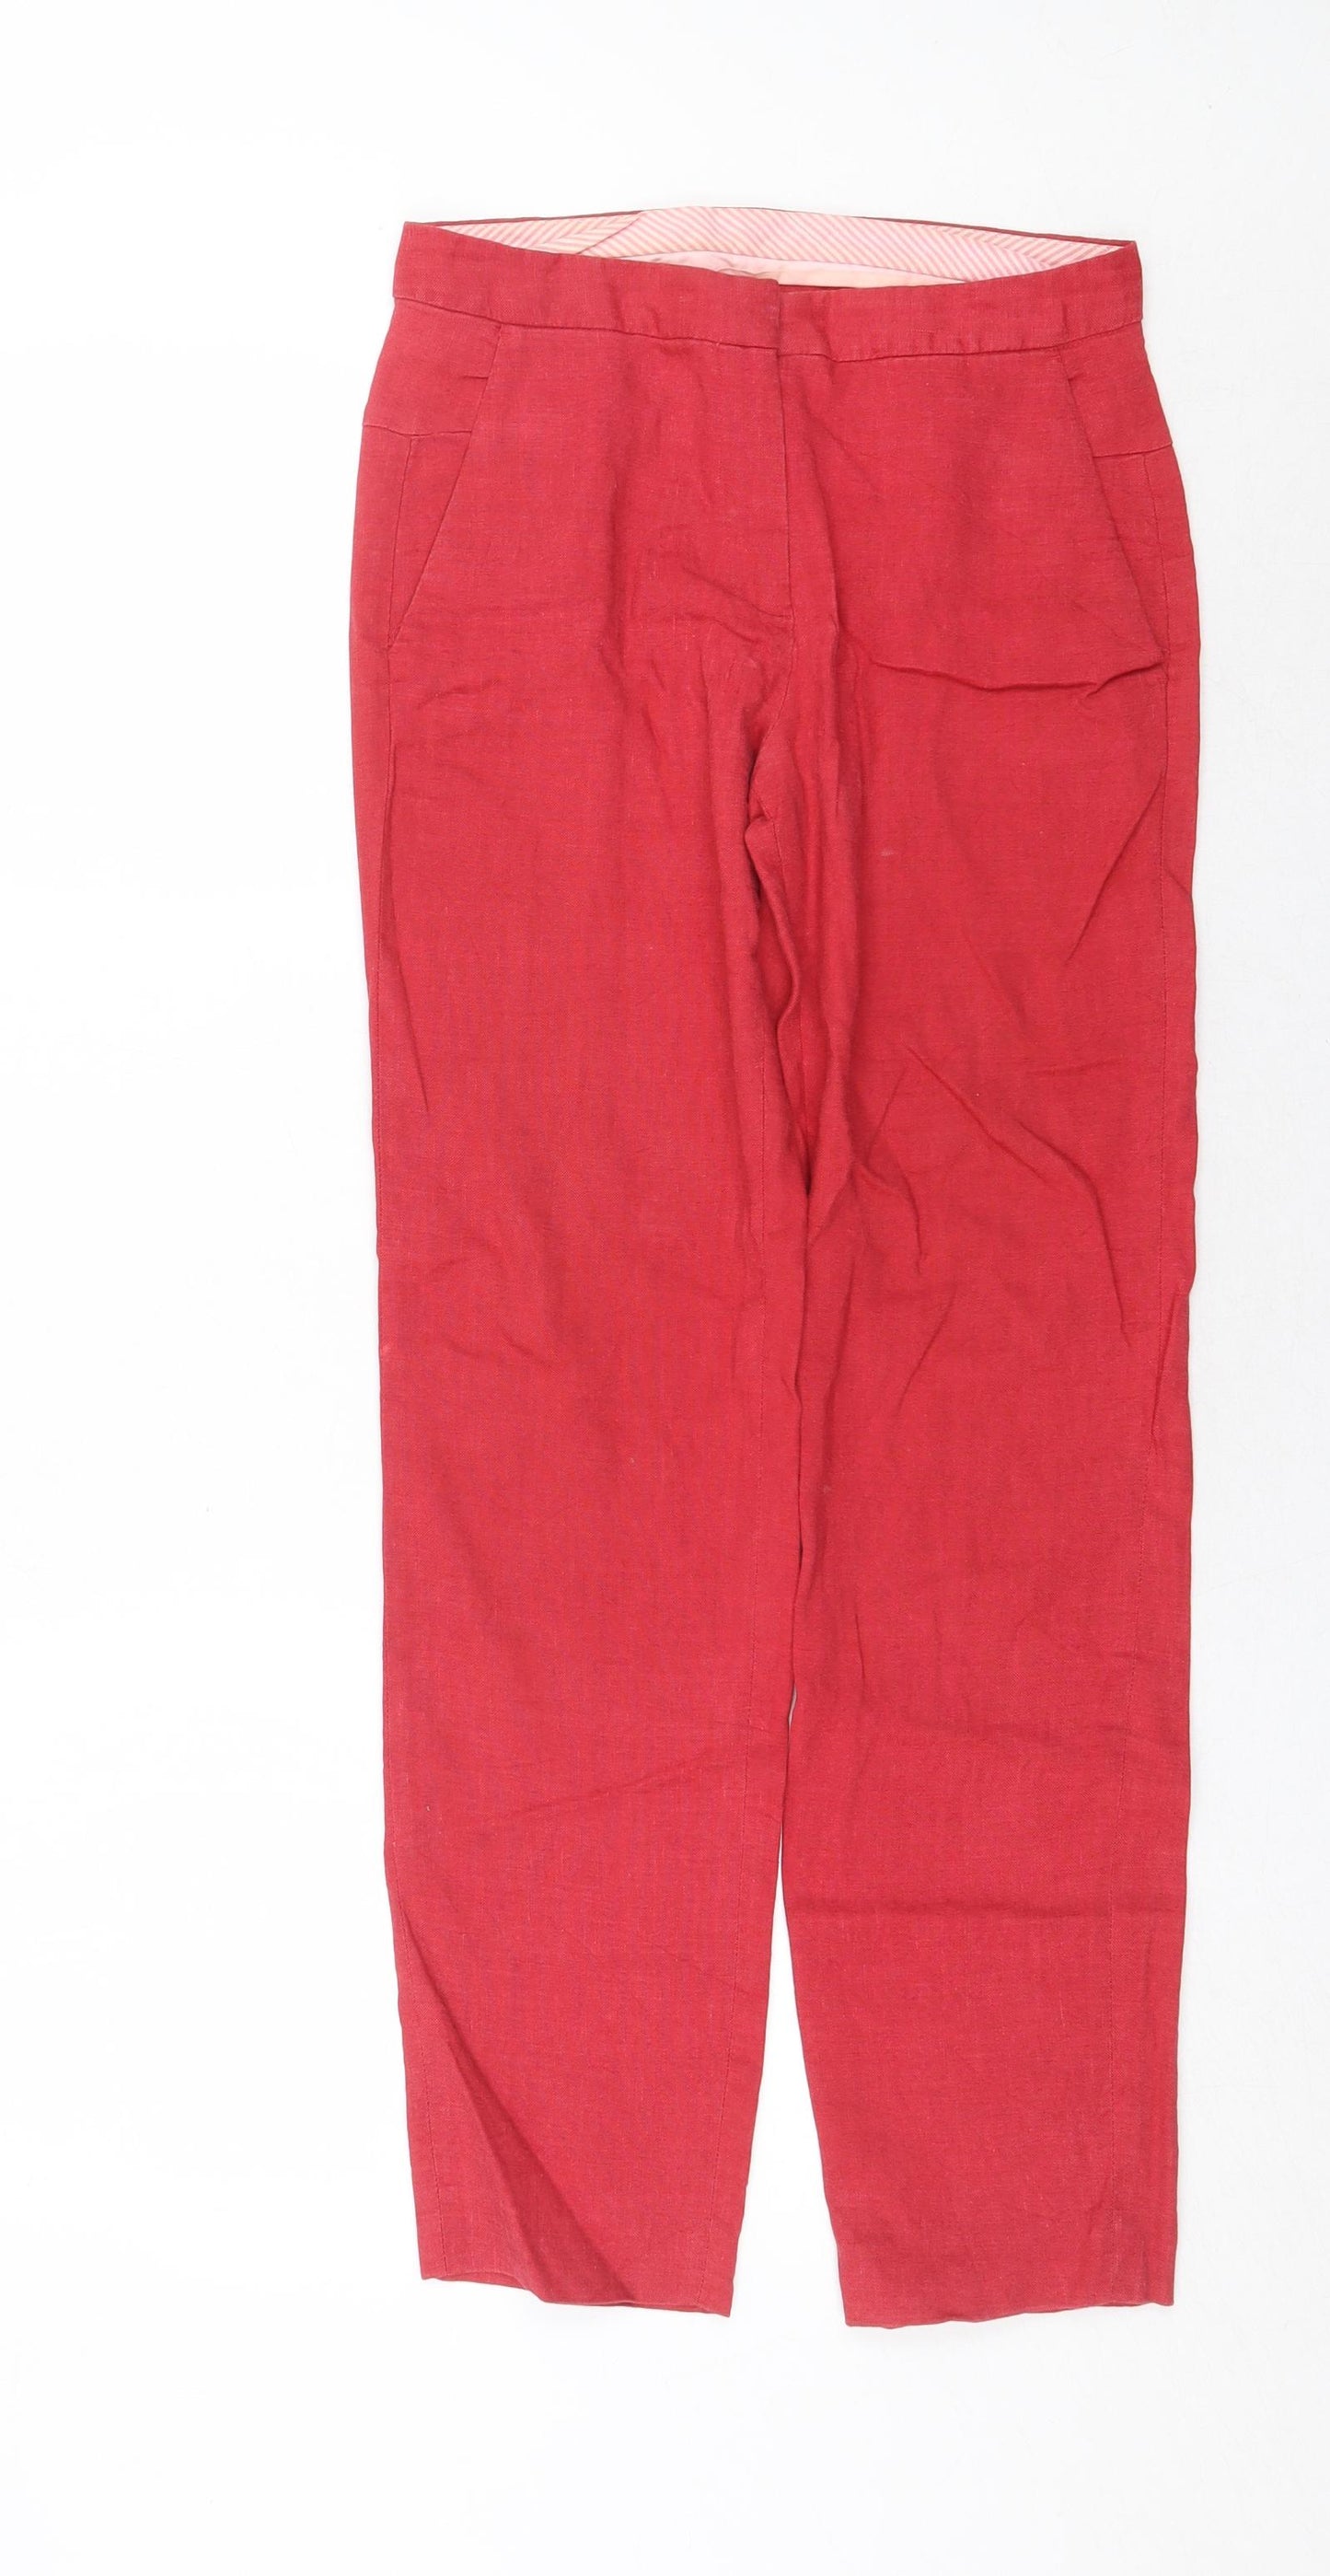 Massimo Dutti Womens Red Linen Trousers Size 6 Regular Zip